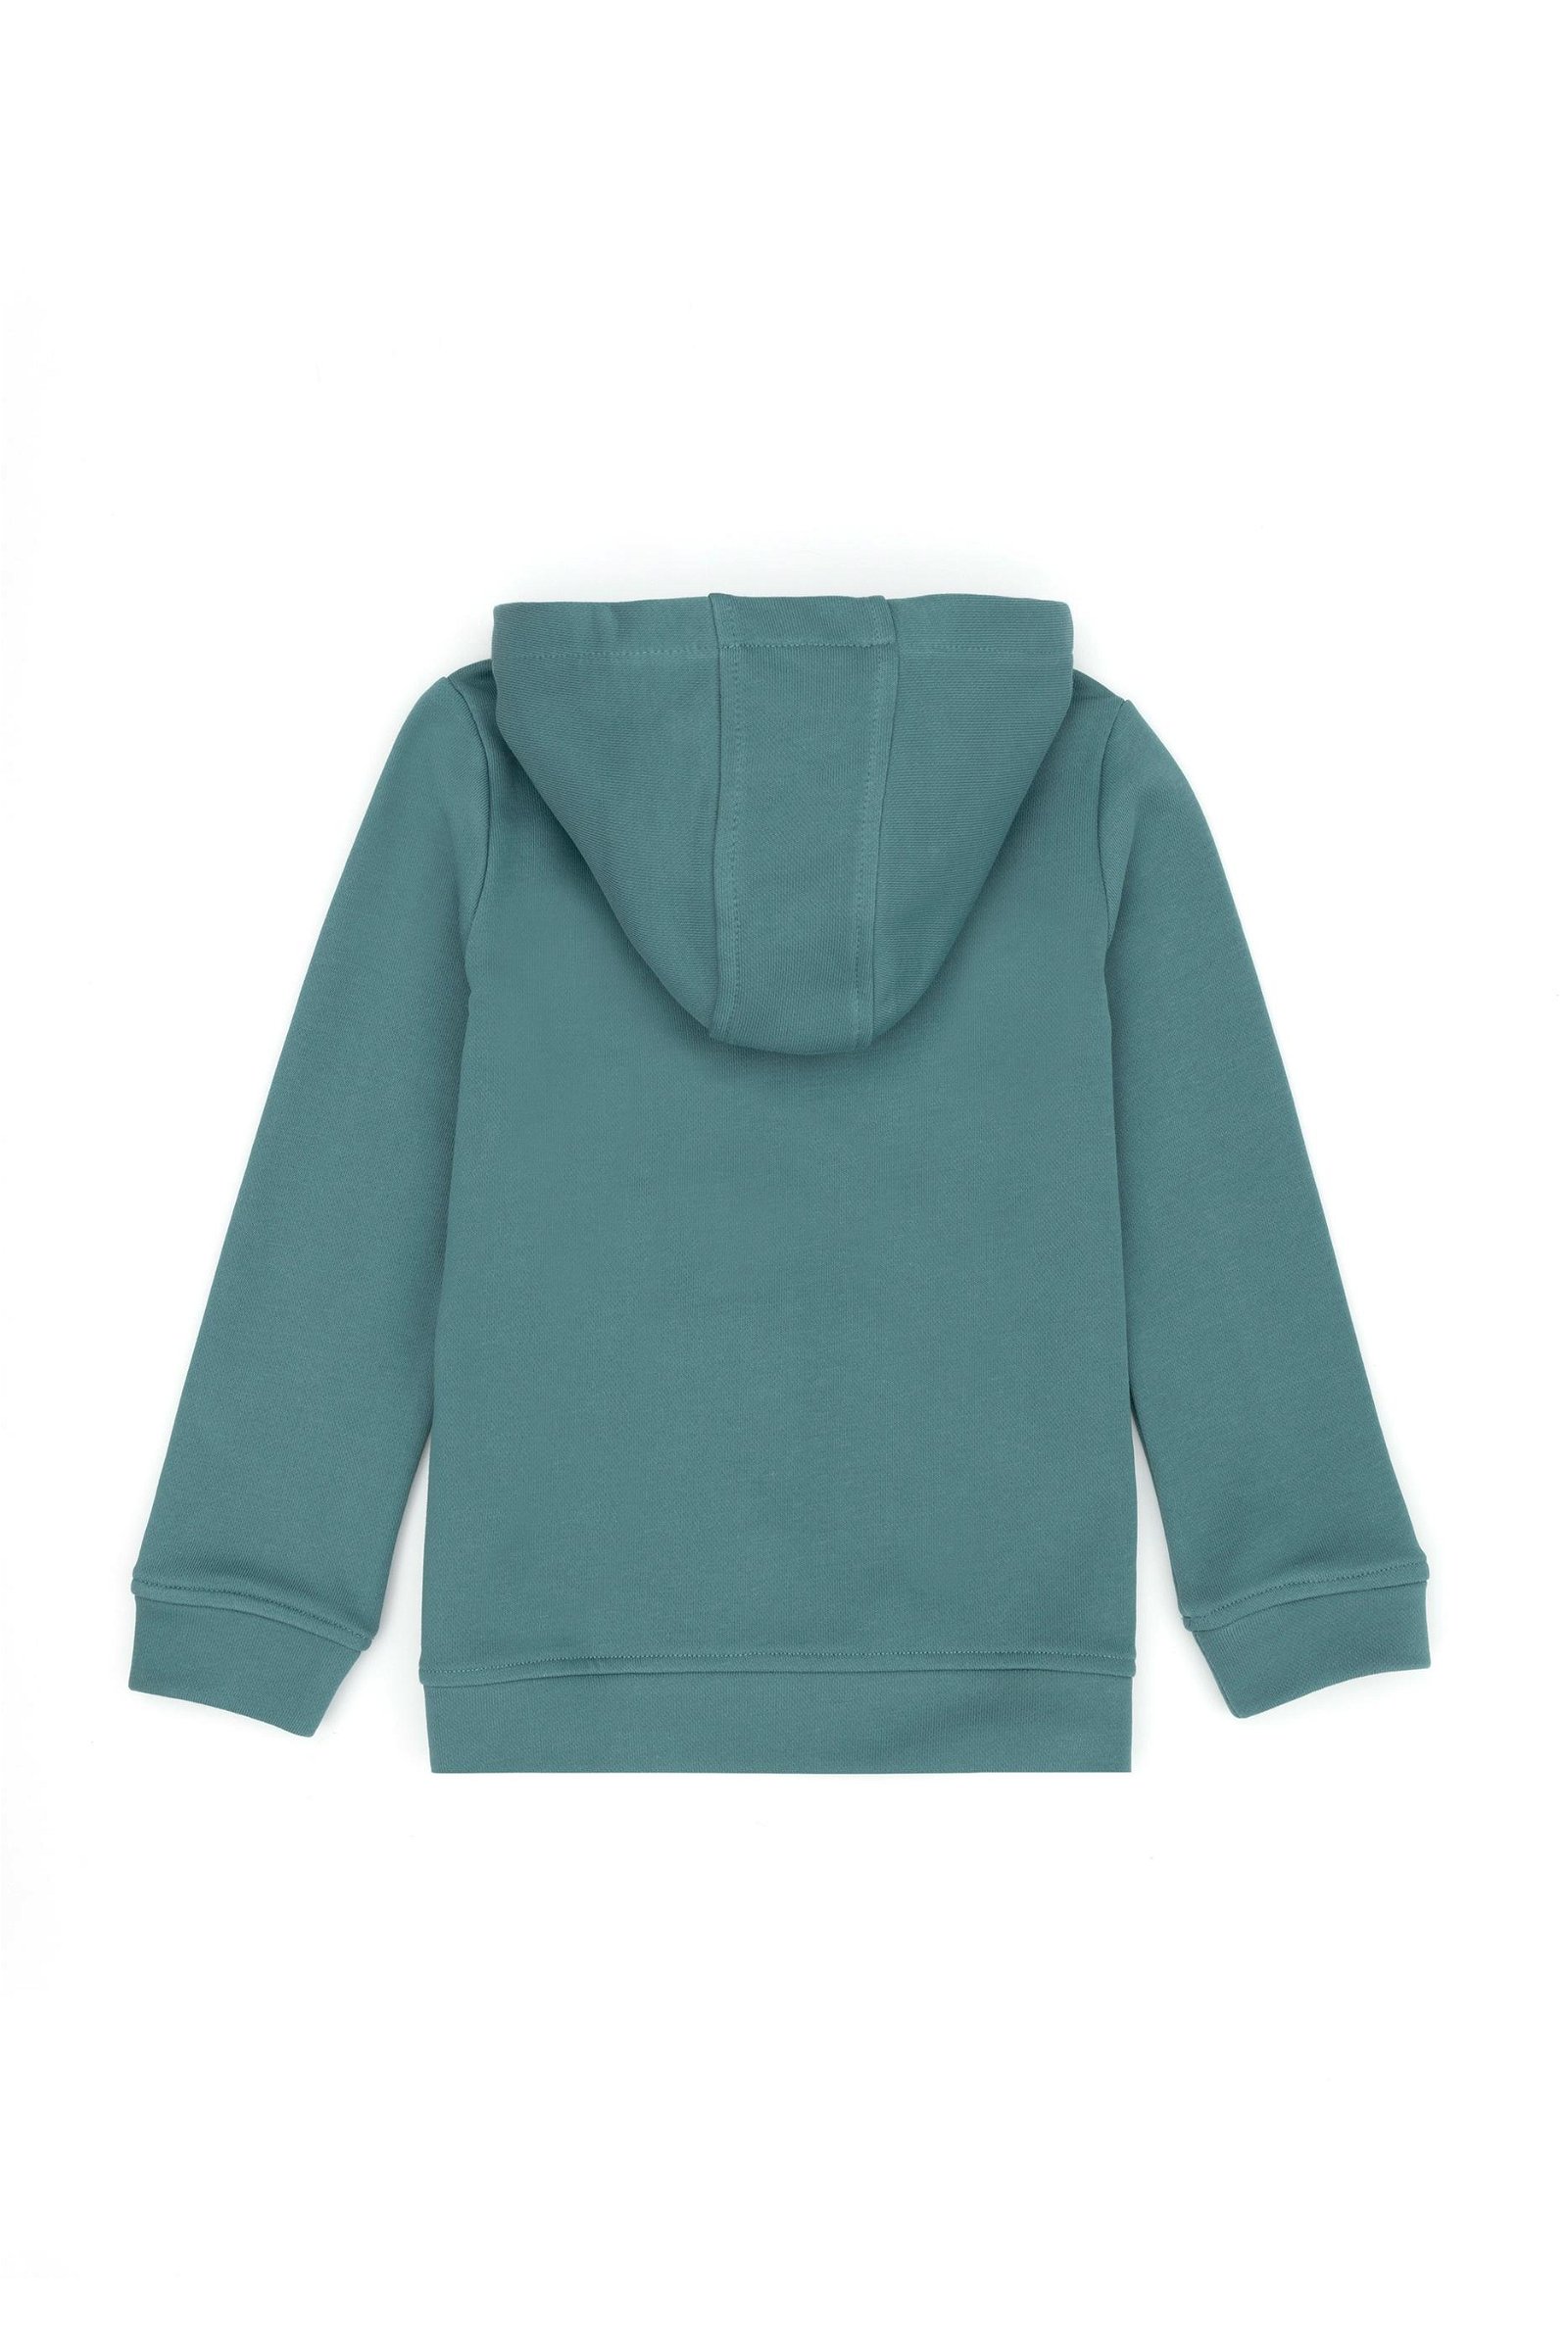 Kız Çocuk Mint Basic Sweatshirt